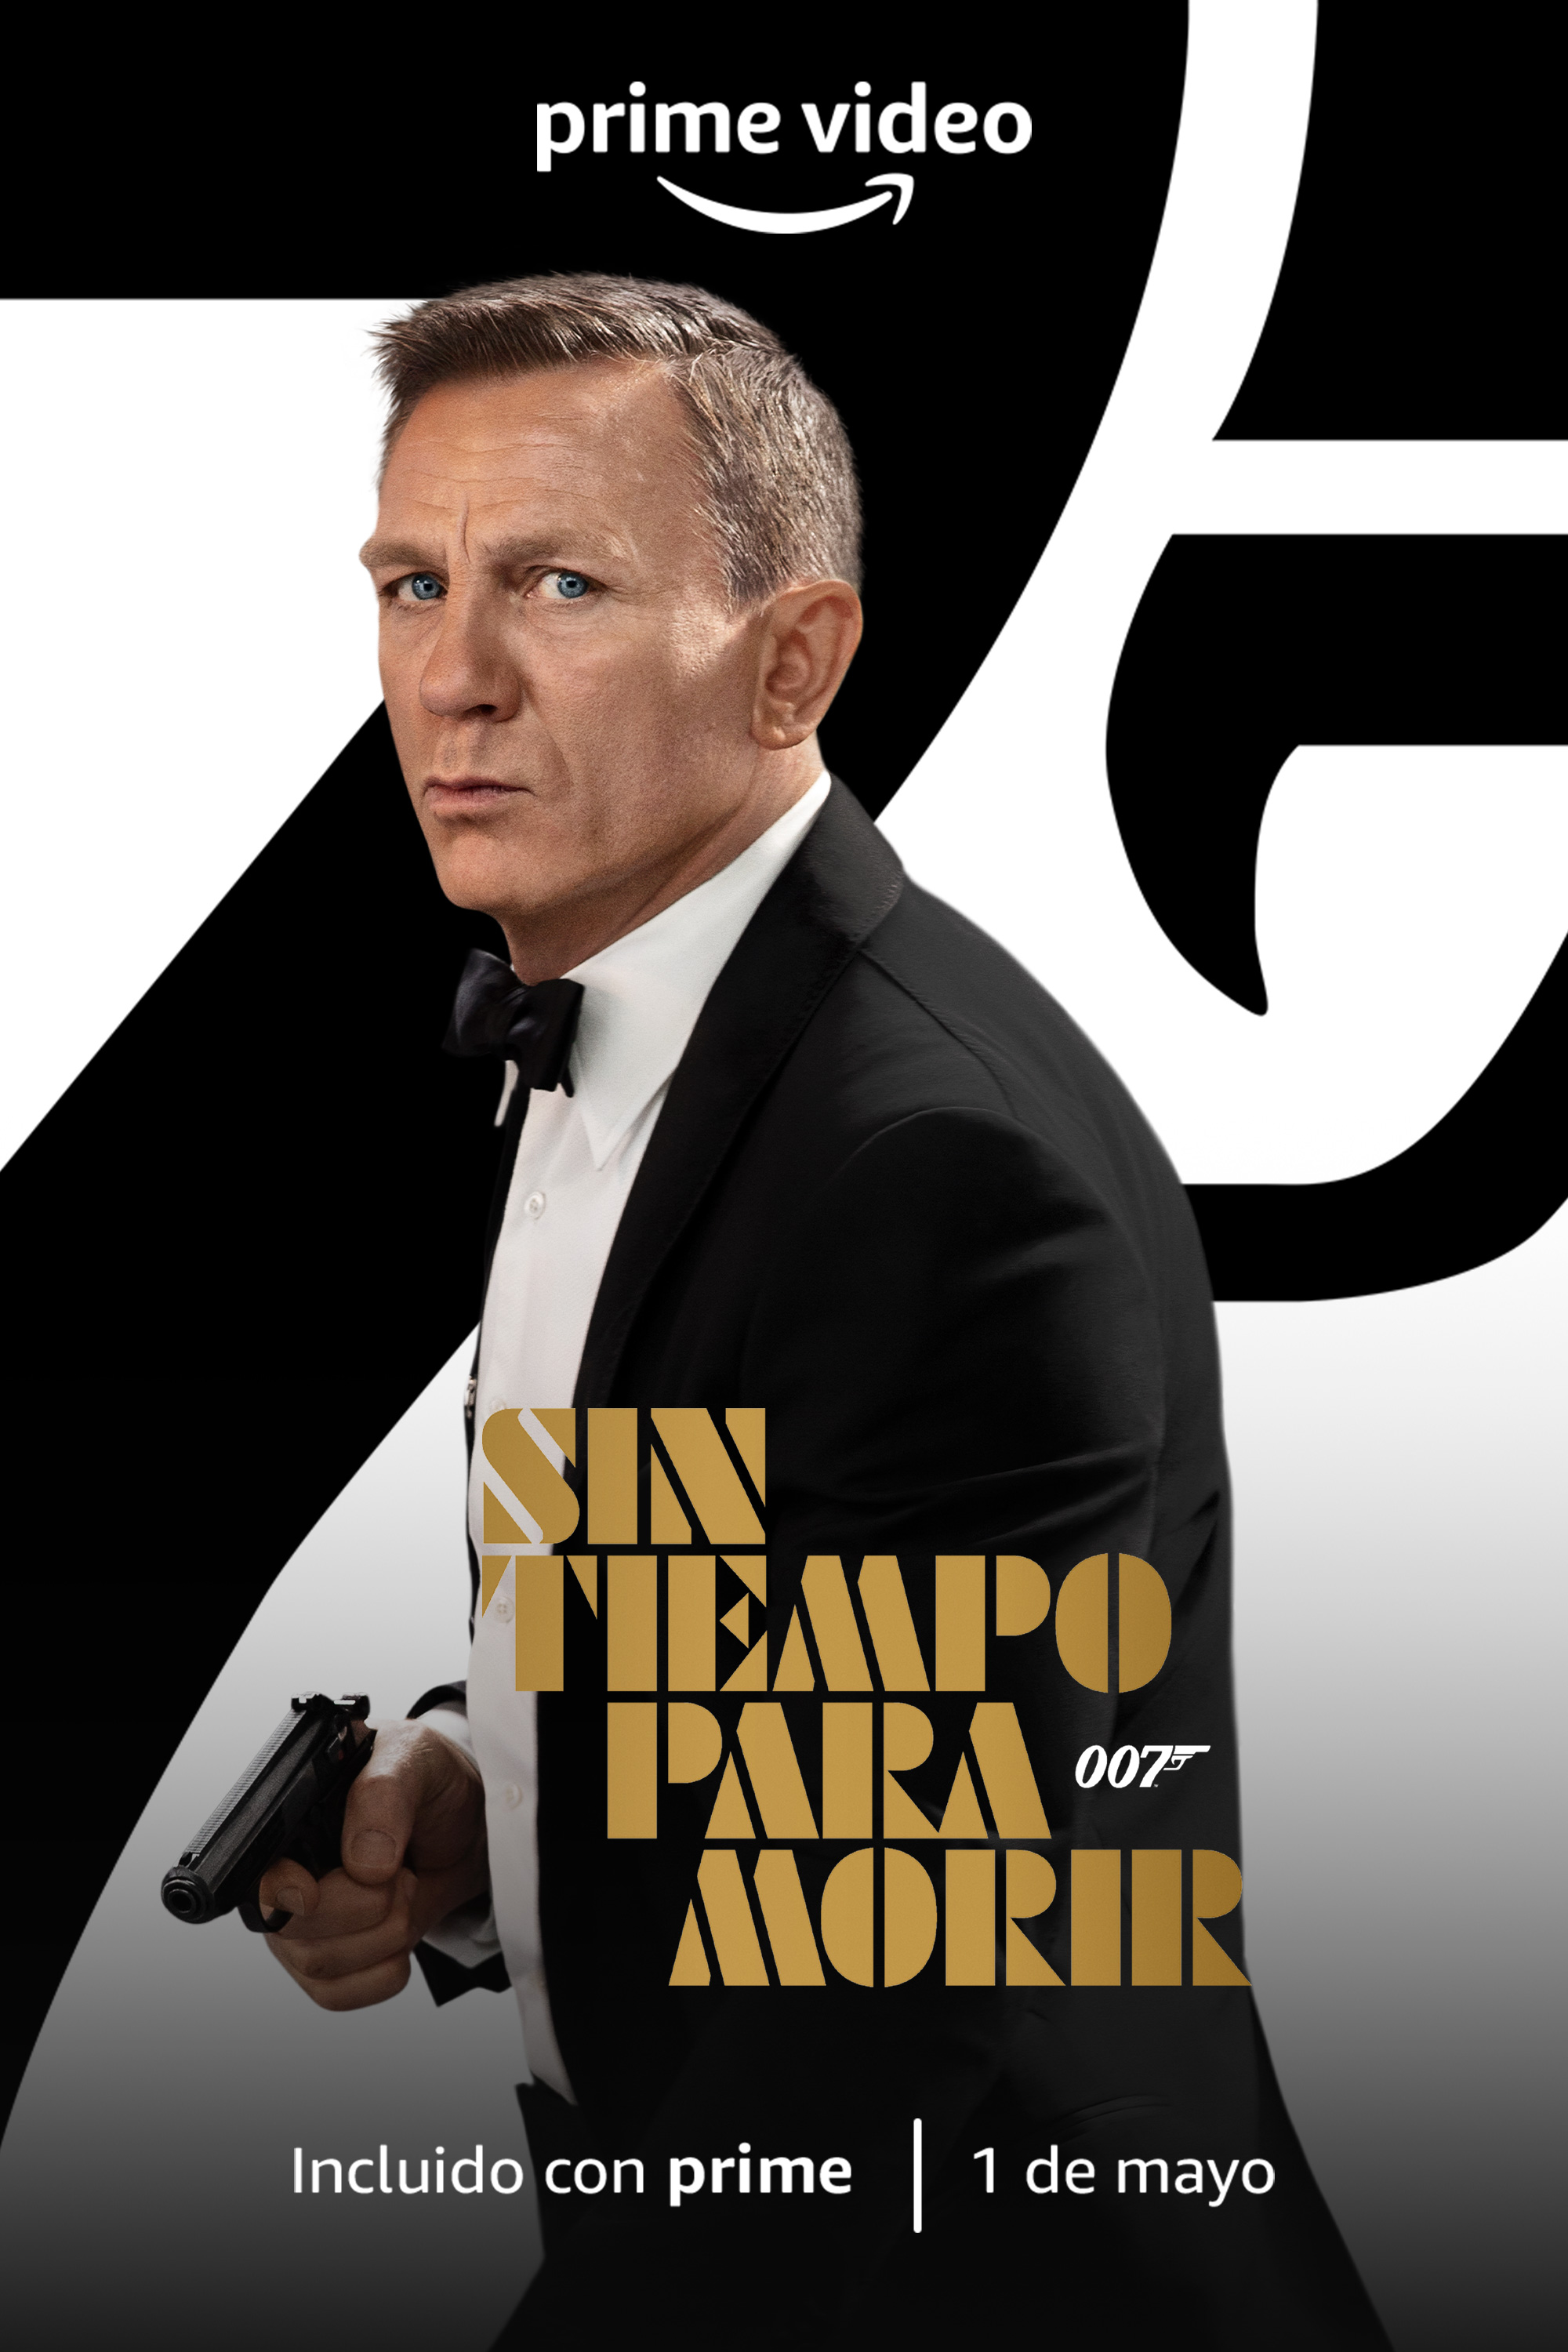 Prime Video incorpora la saga completa de James Bond a su catálogo